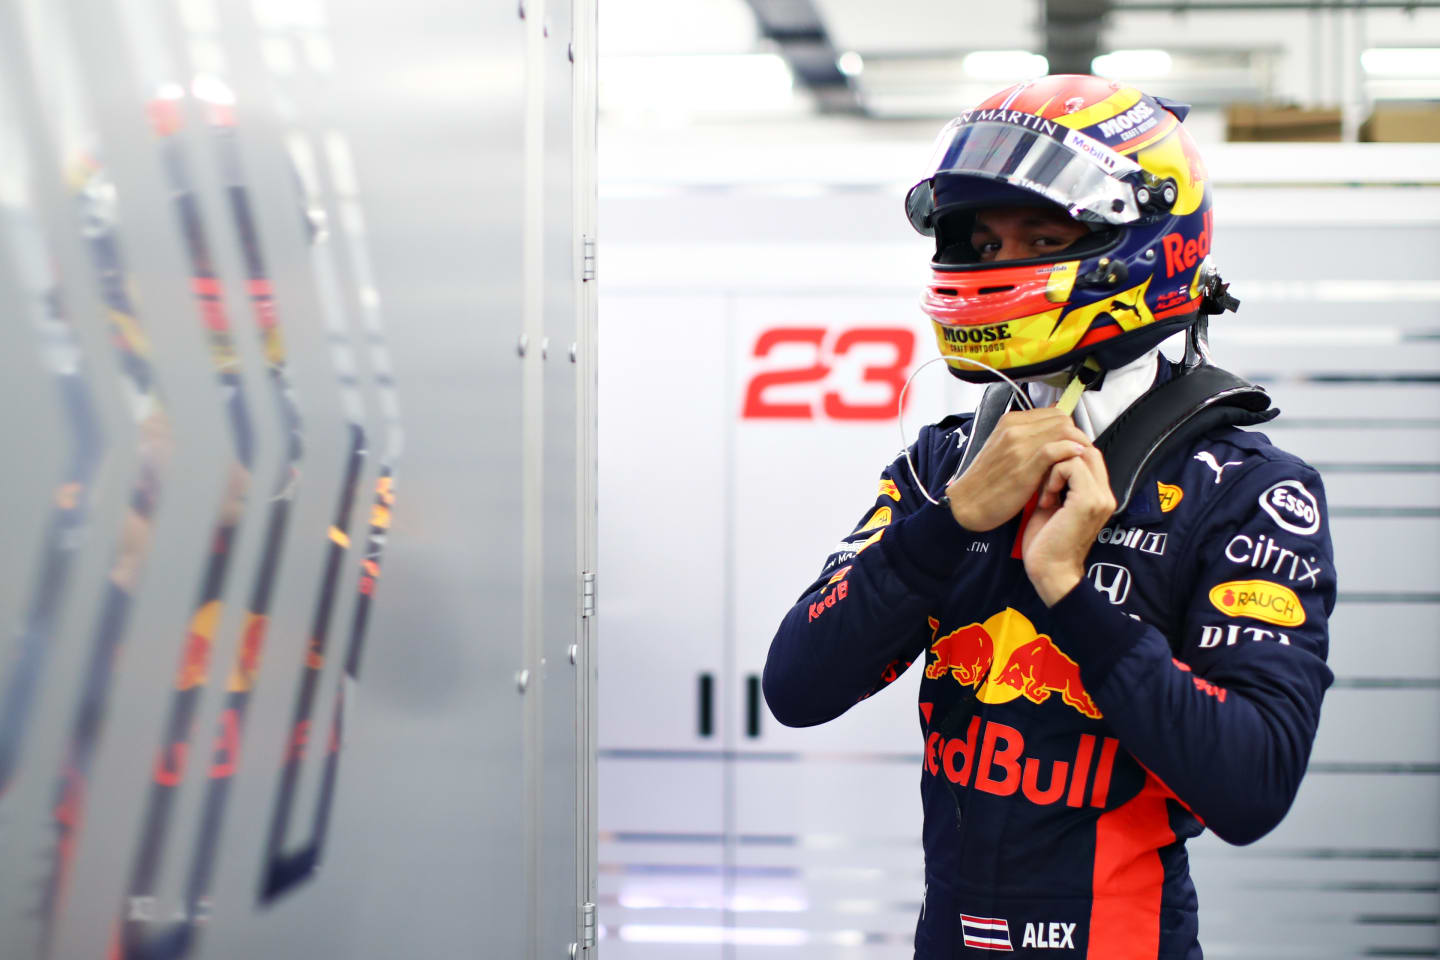 BAHRAIN, BAHRAIN - DECEMBER 04: Alexander Albon of Thailand and Red Bull Racing prepares to drive